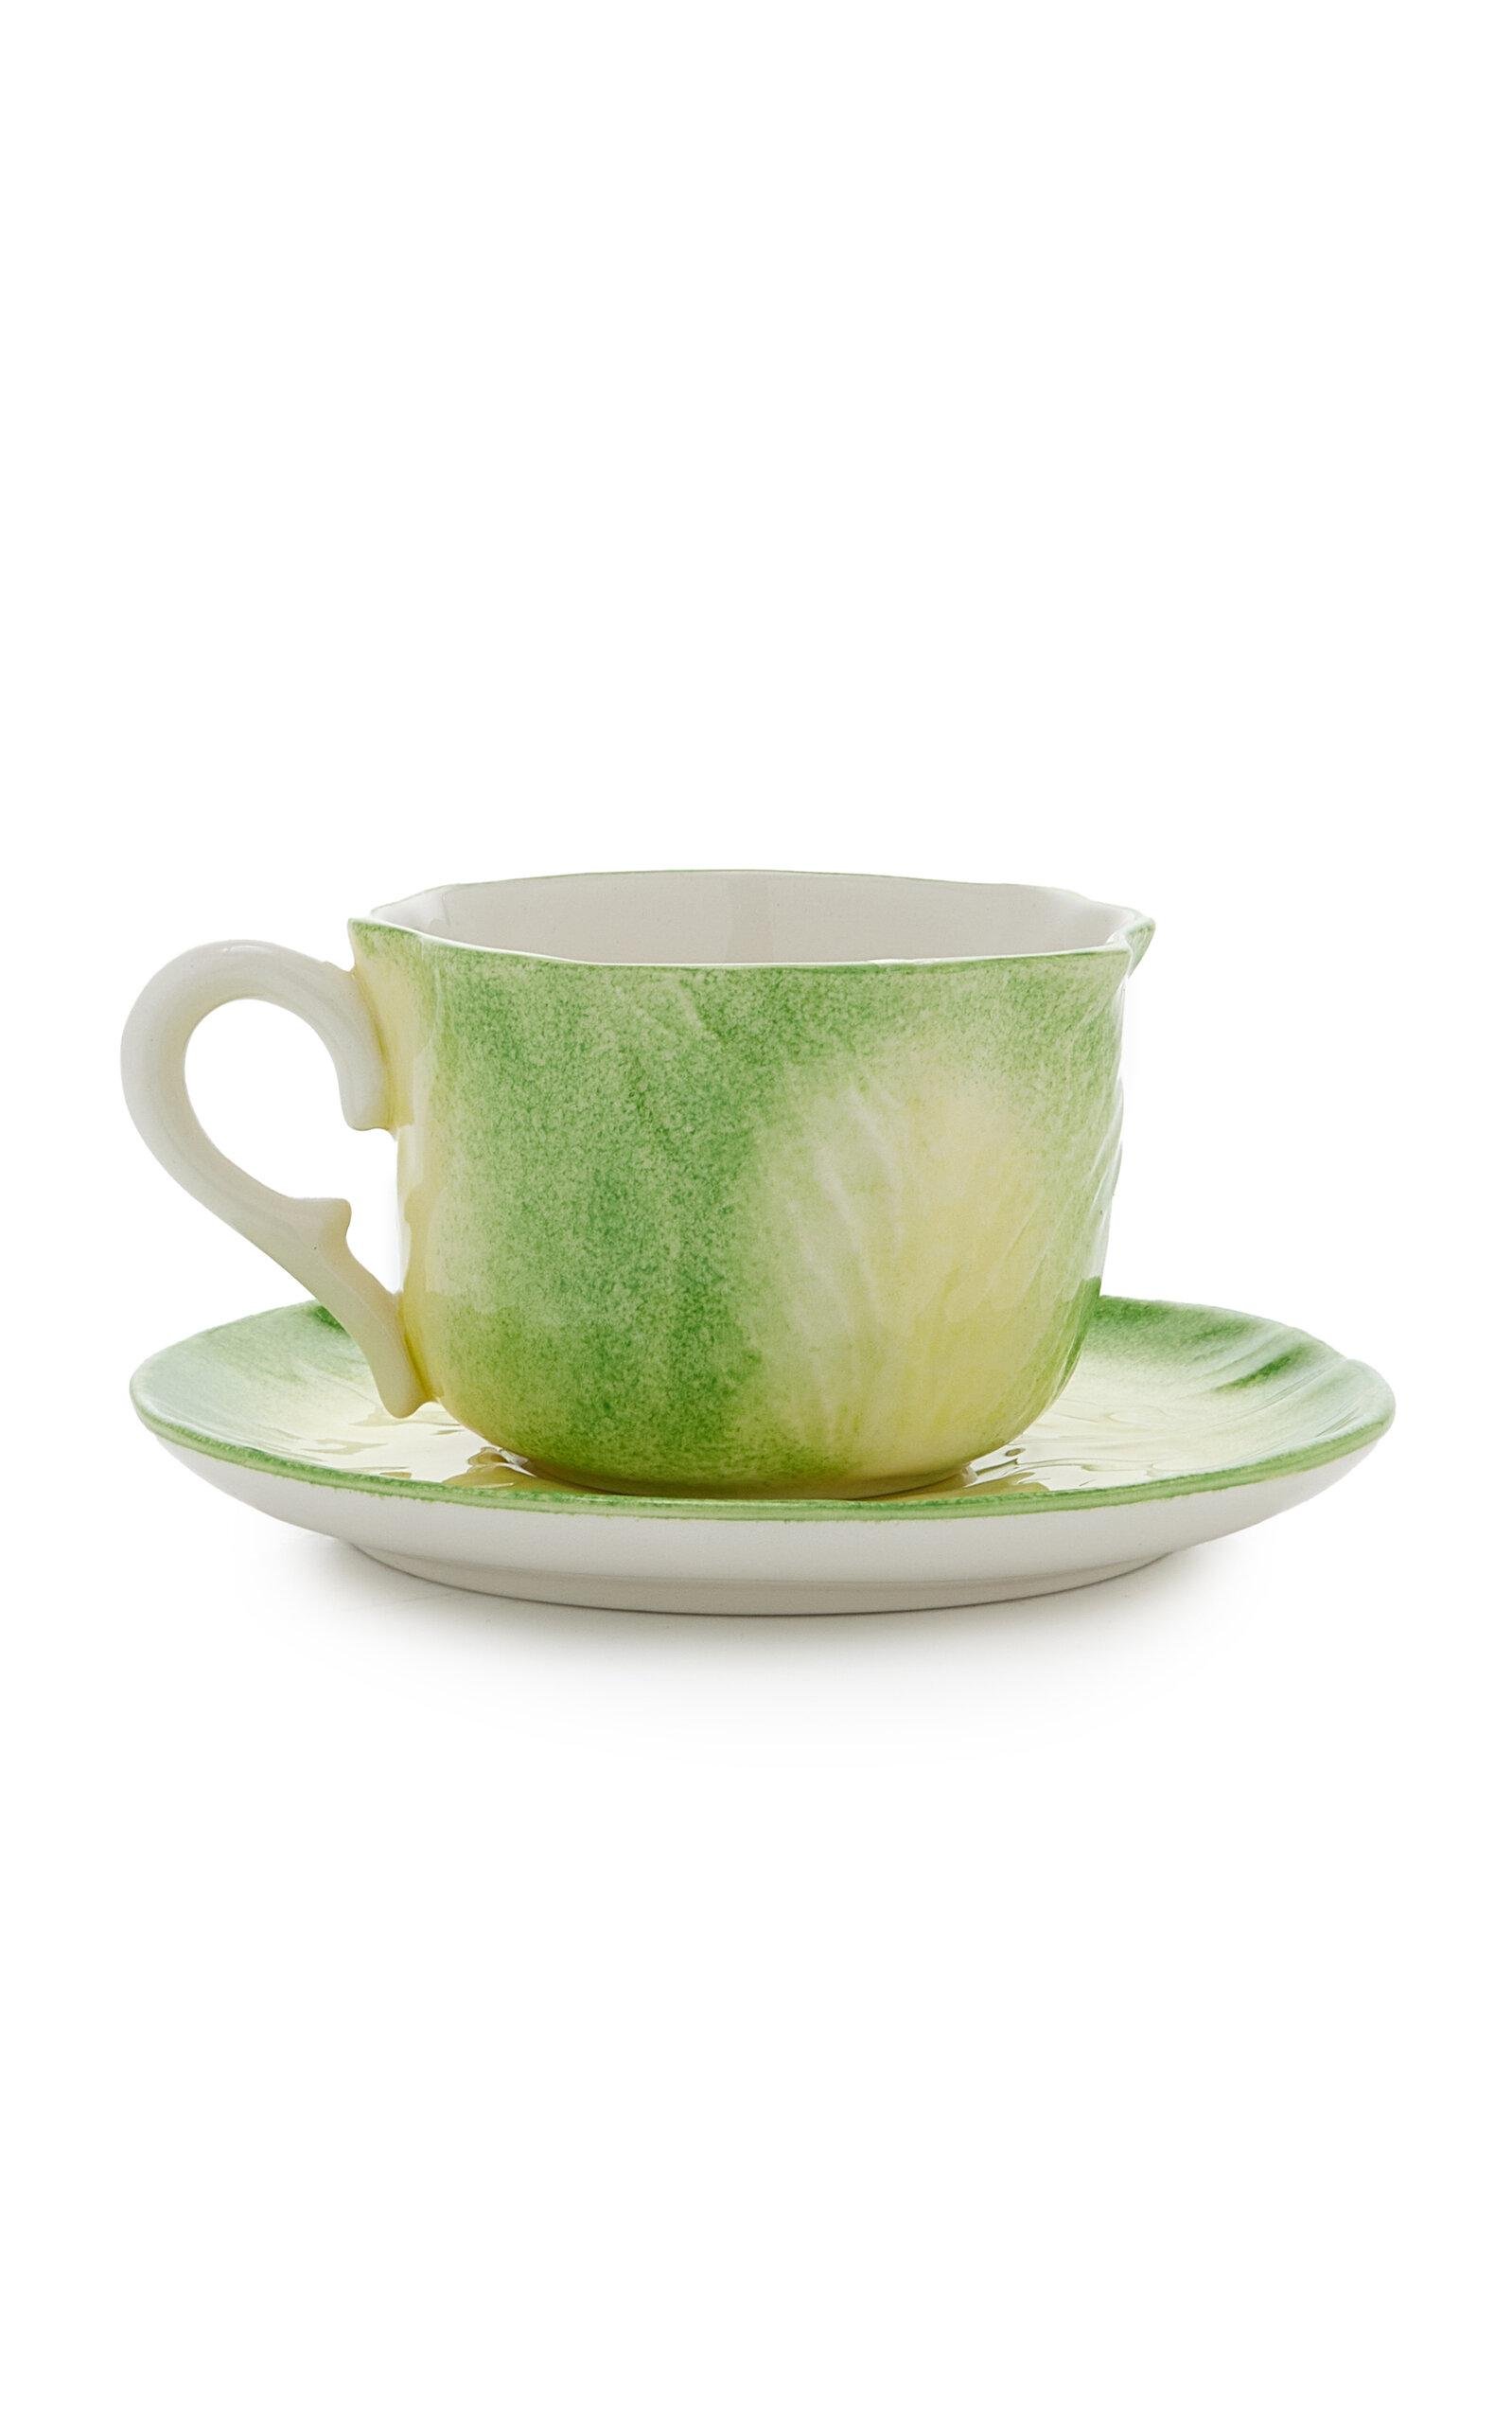 Moda Domus - Handcrafted Ceramic Cabbage Tea Cup and Saucer - Green - Moda Operandi by MODA DOMUS